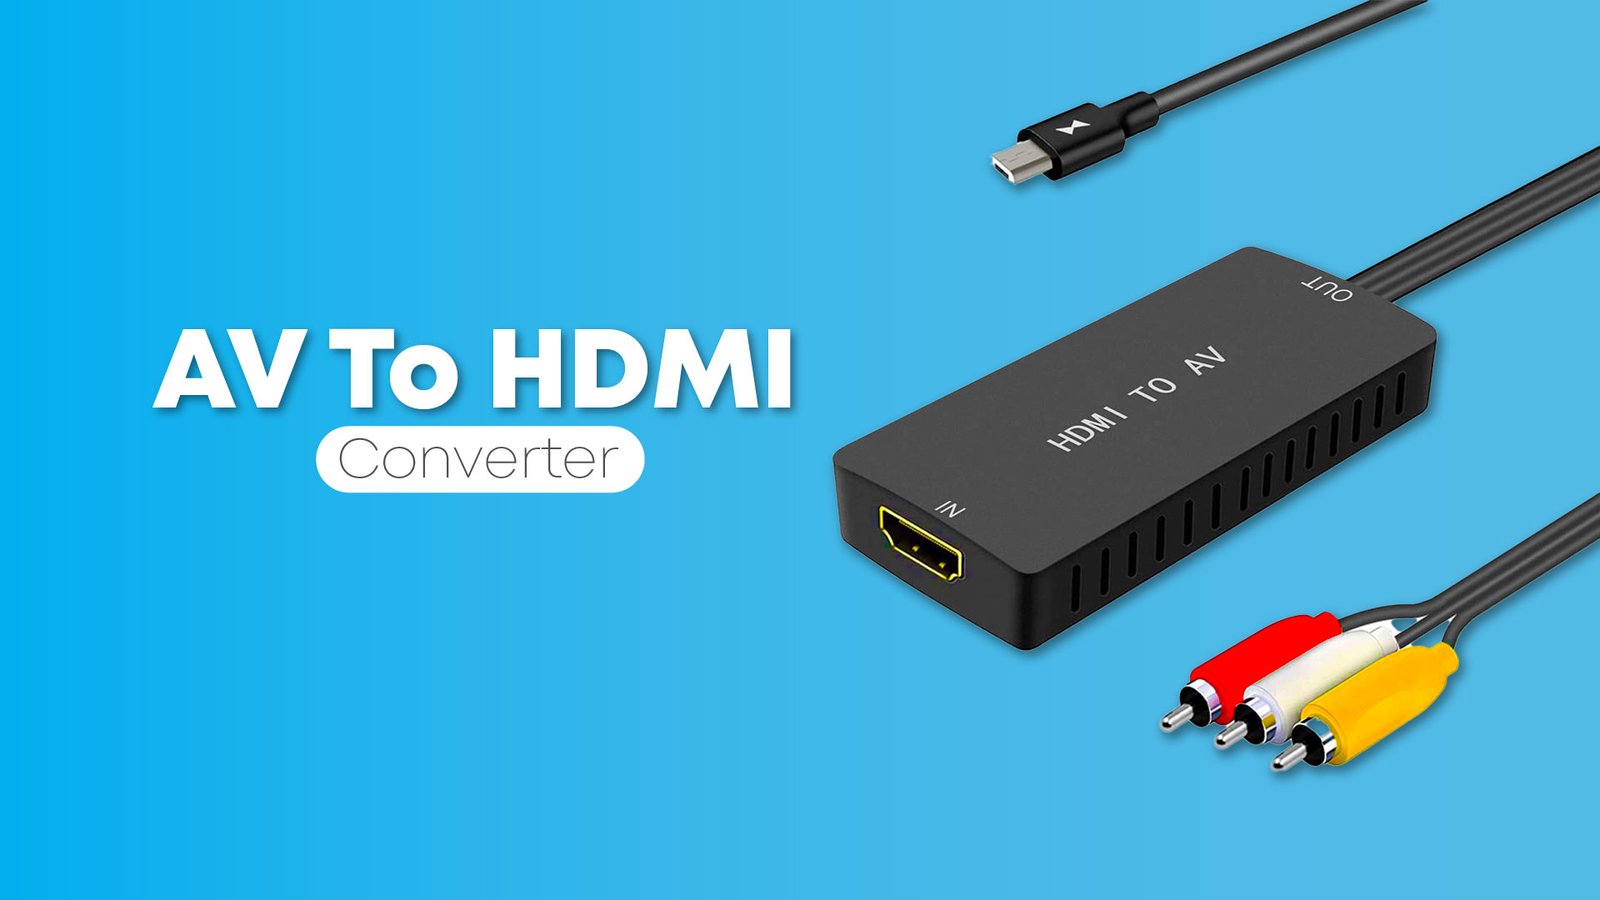 Lima kaart vergeten 10+ Best AV To HDMI Converter 2023: According To Experts